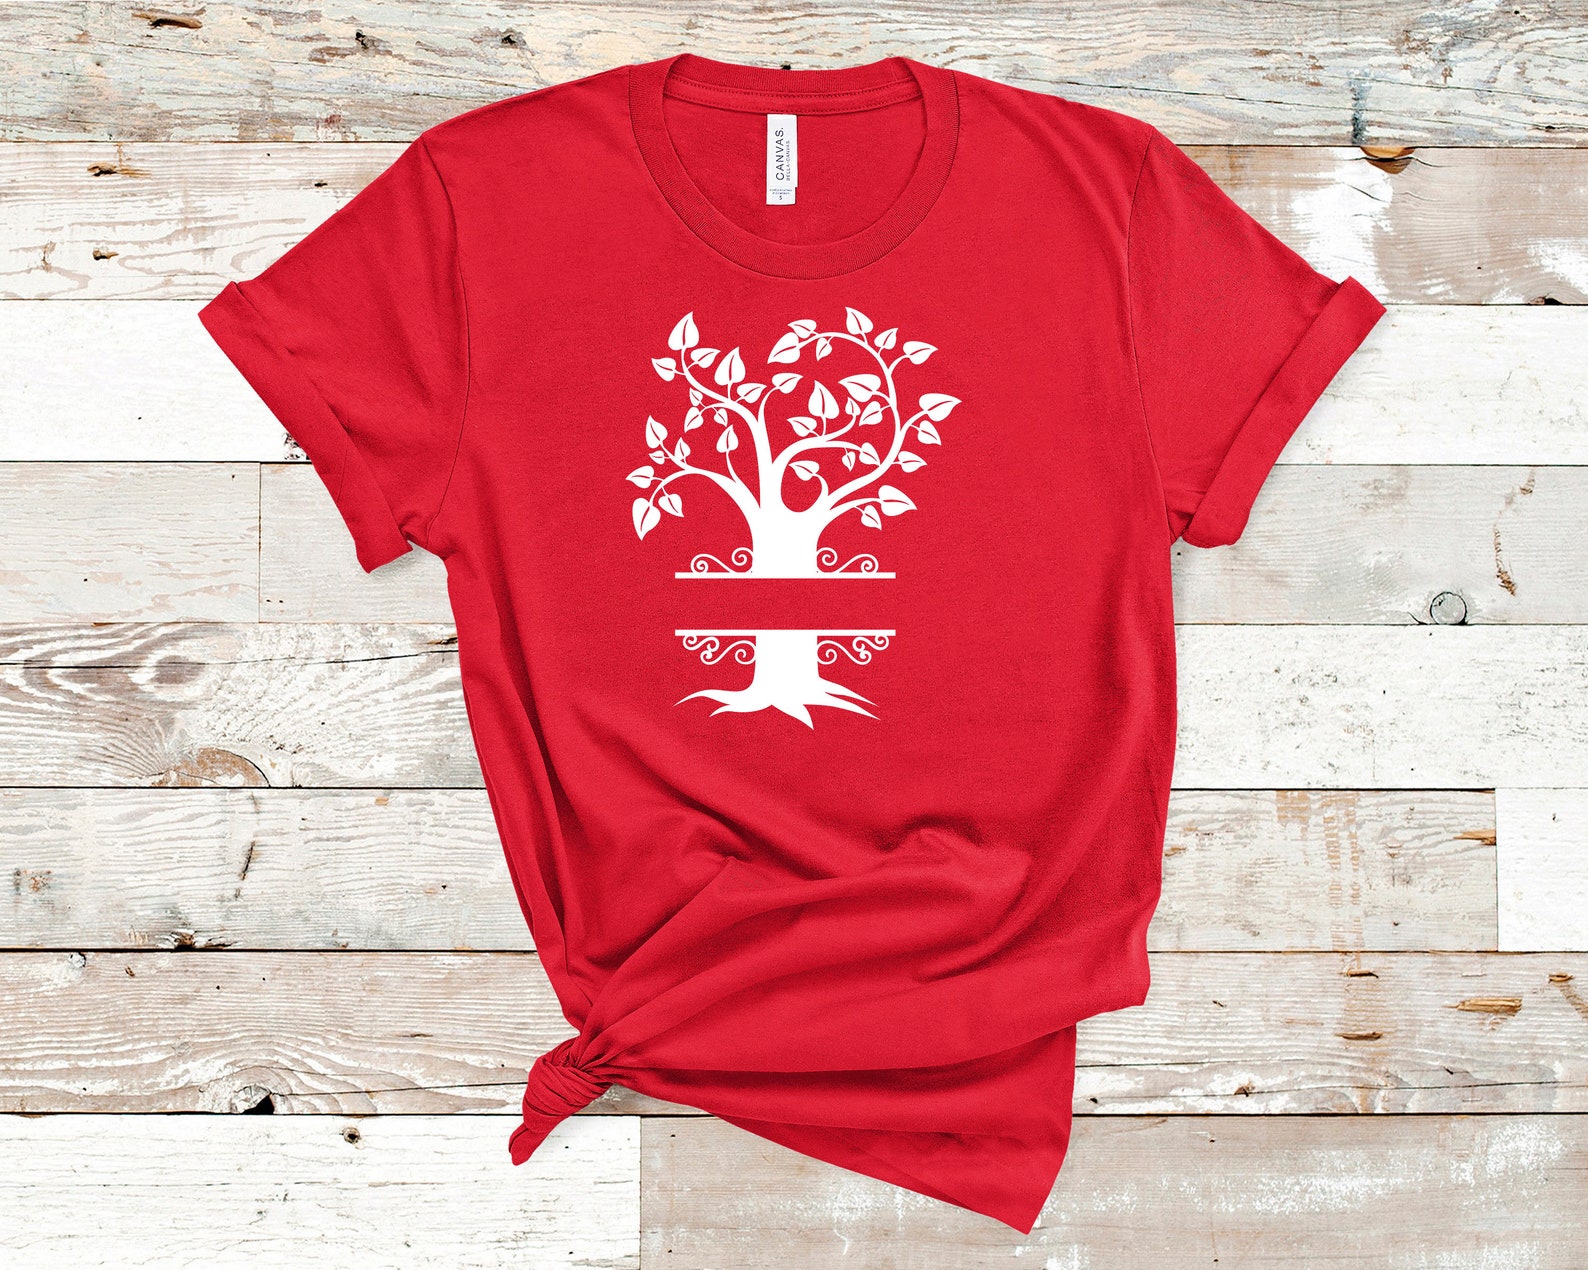 Family Tree T Shirt Template